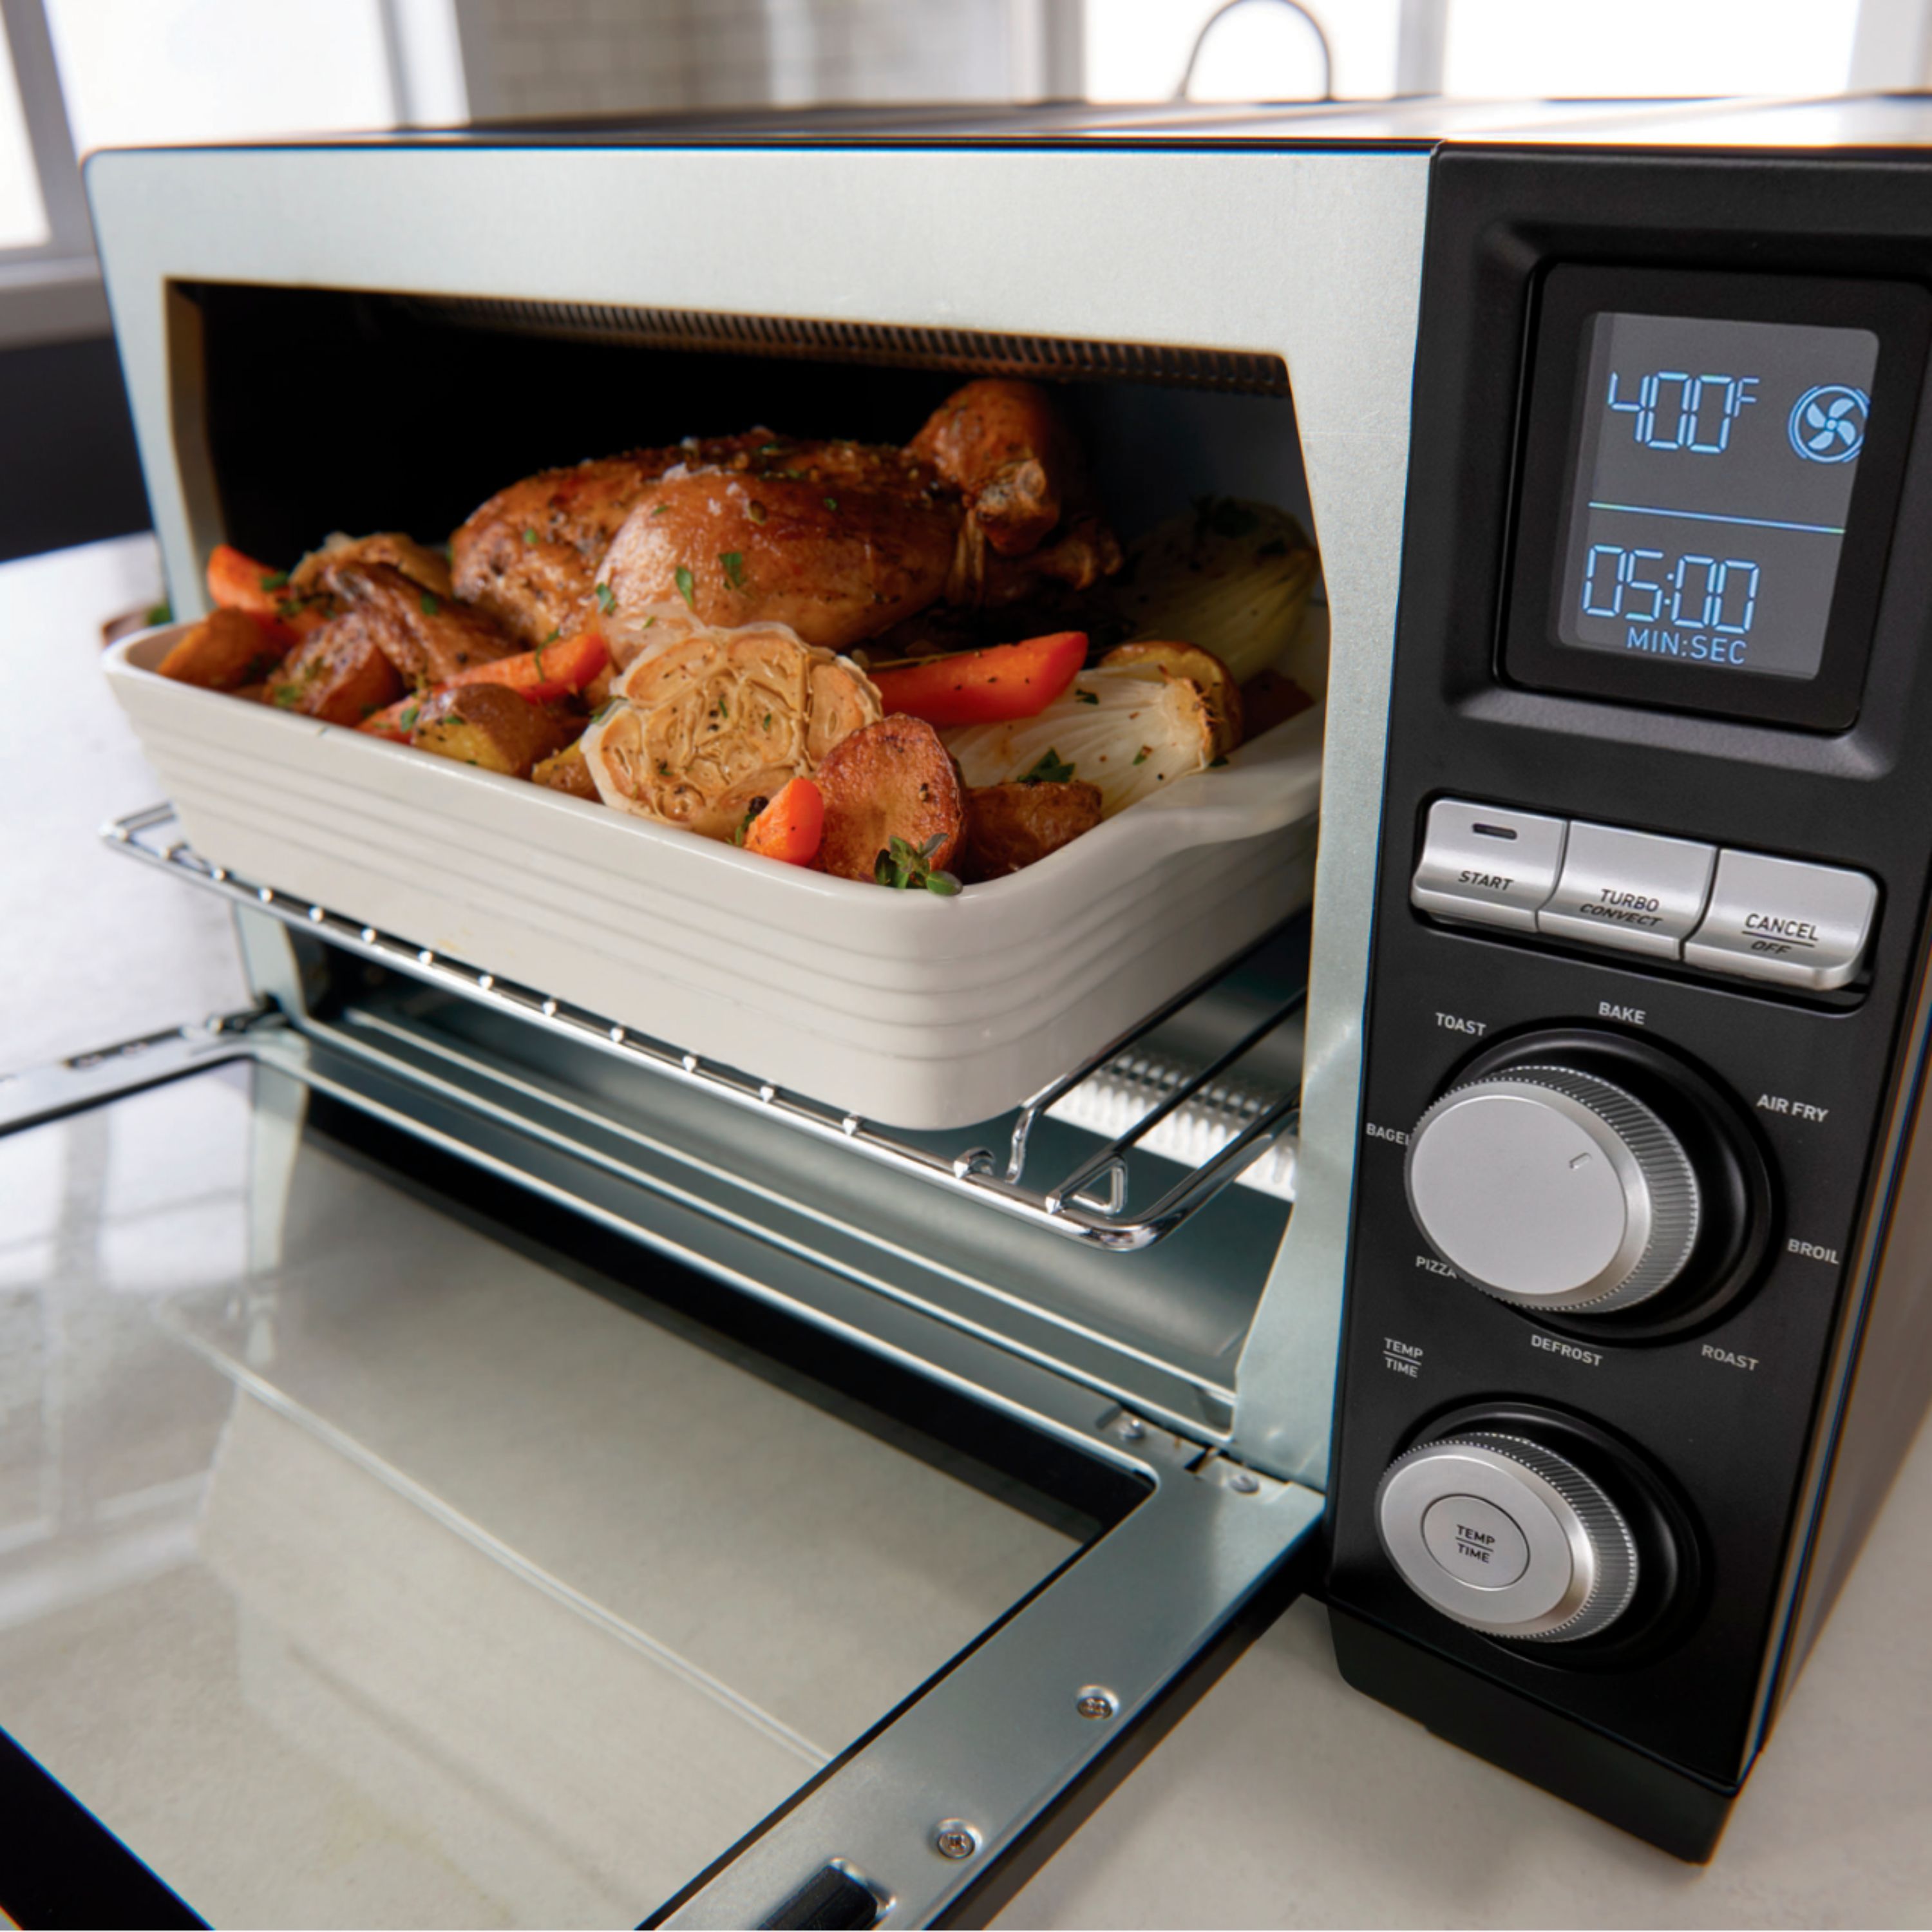 Calphalon Precision Air Fry Convection Oven, Countertop Toaster Oven Black 2109247 - Best Buy